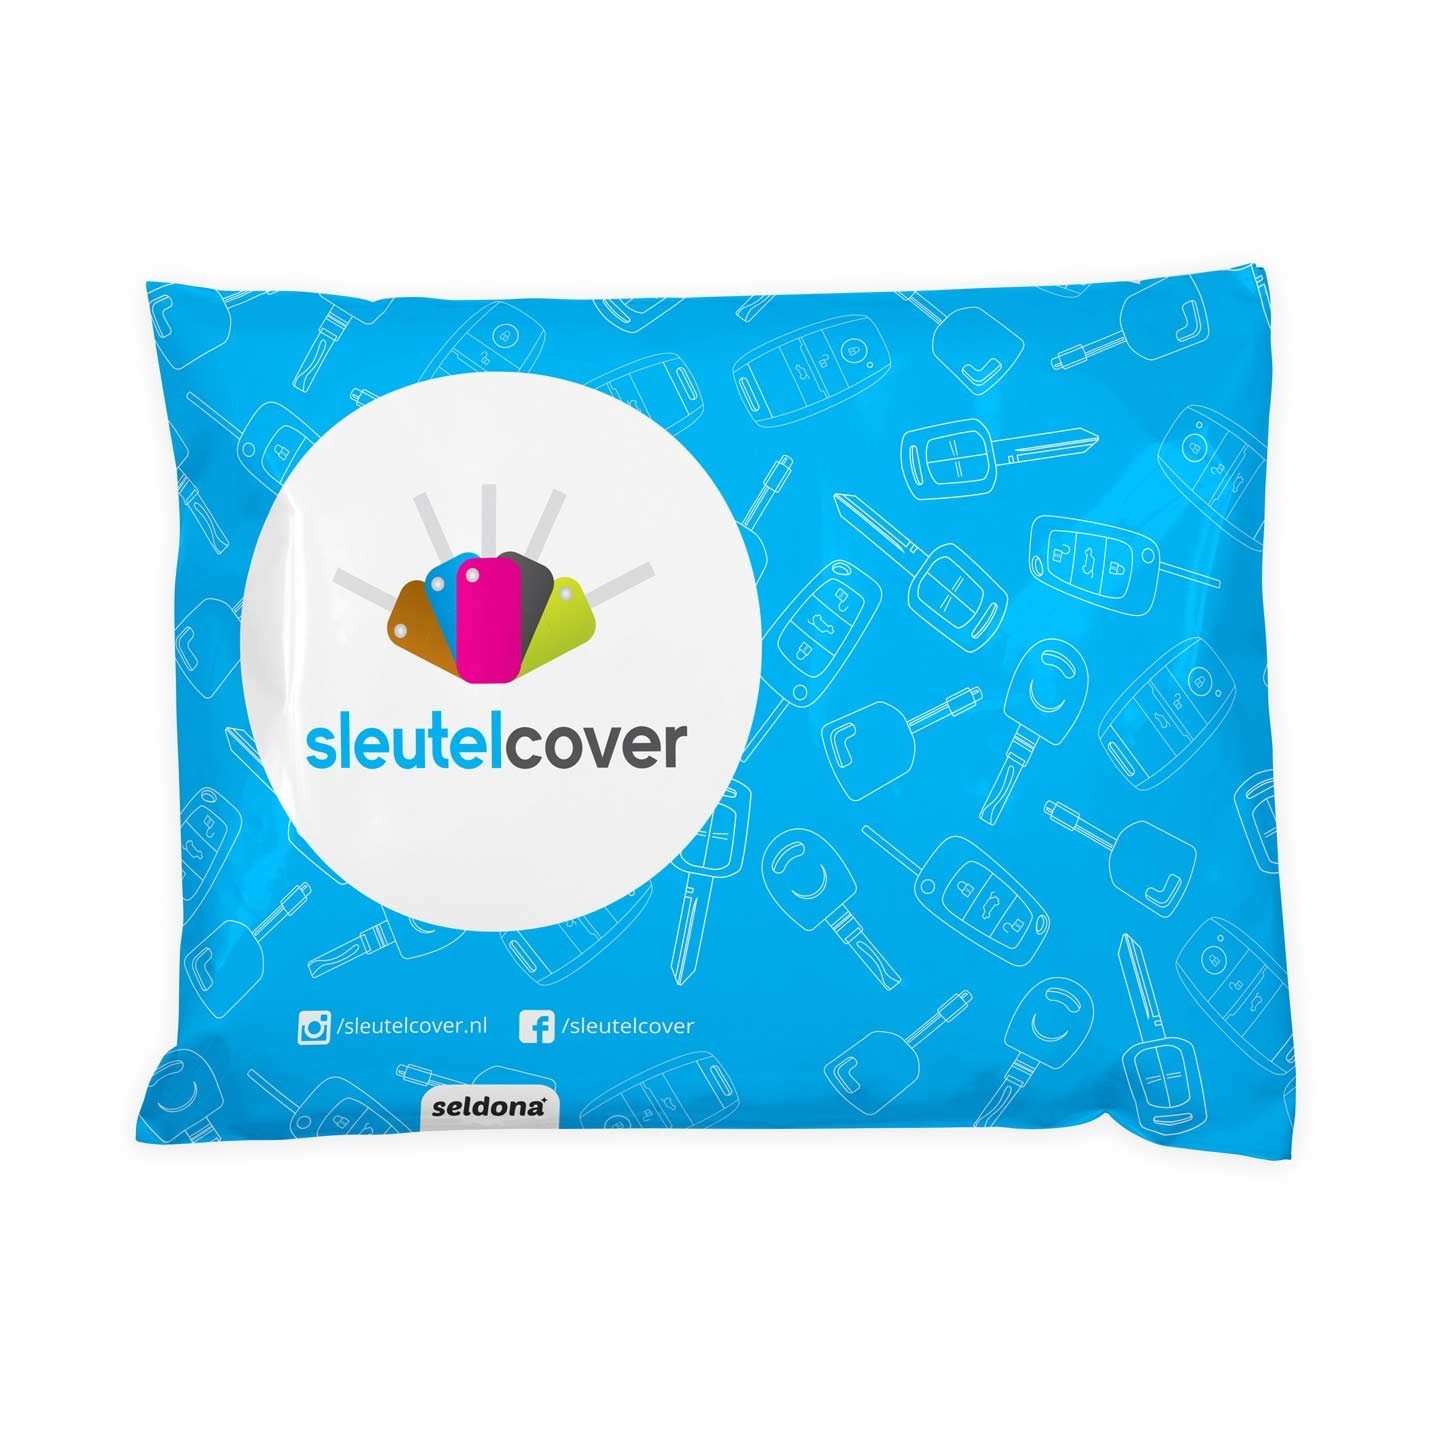 Skoda SleutelCover - Lichtblauw / Silicone sleutelhoesje / beschermhoesje autosleutel